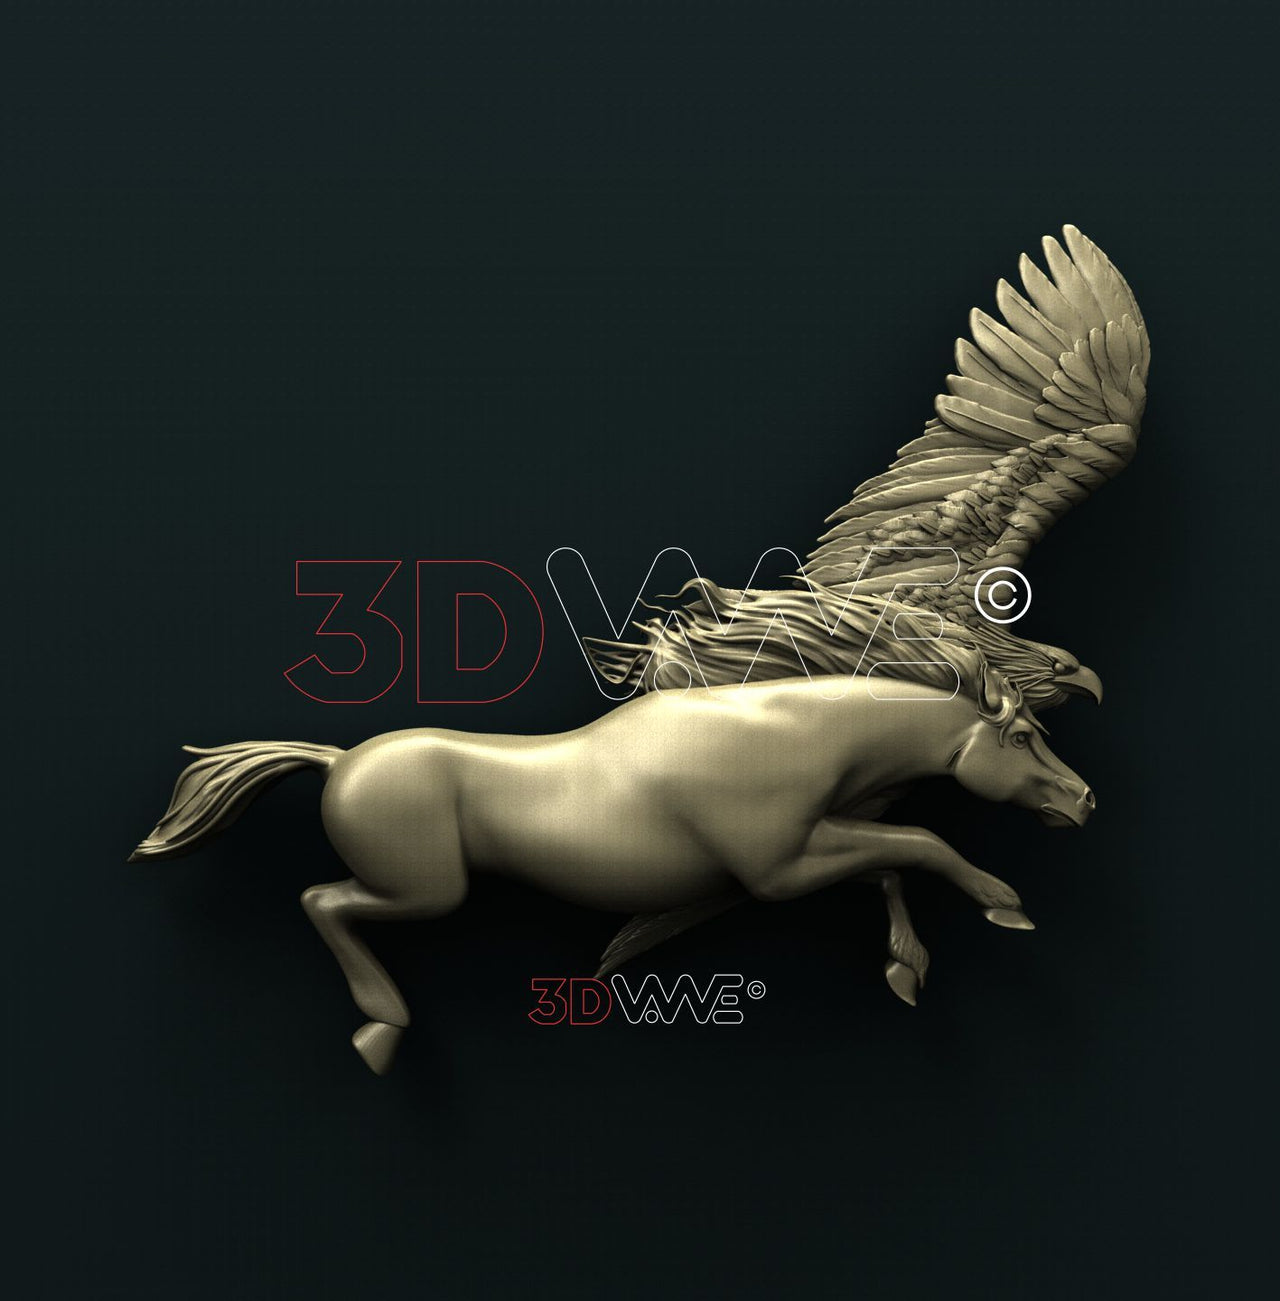 HORSE AND EAGLE 3D STL 3DWave